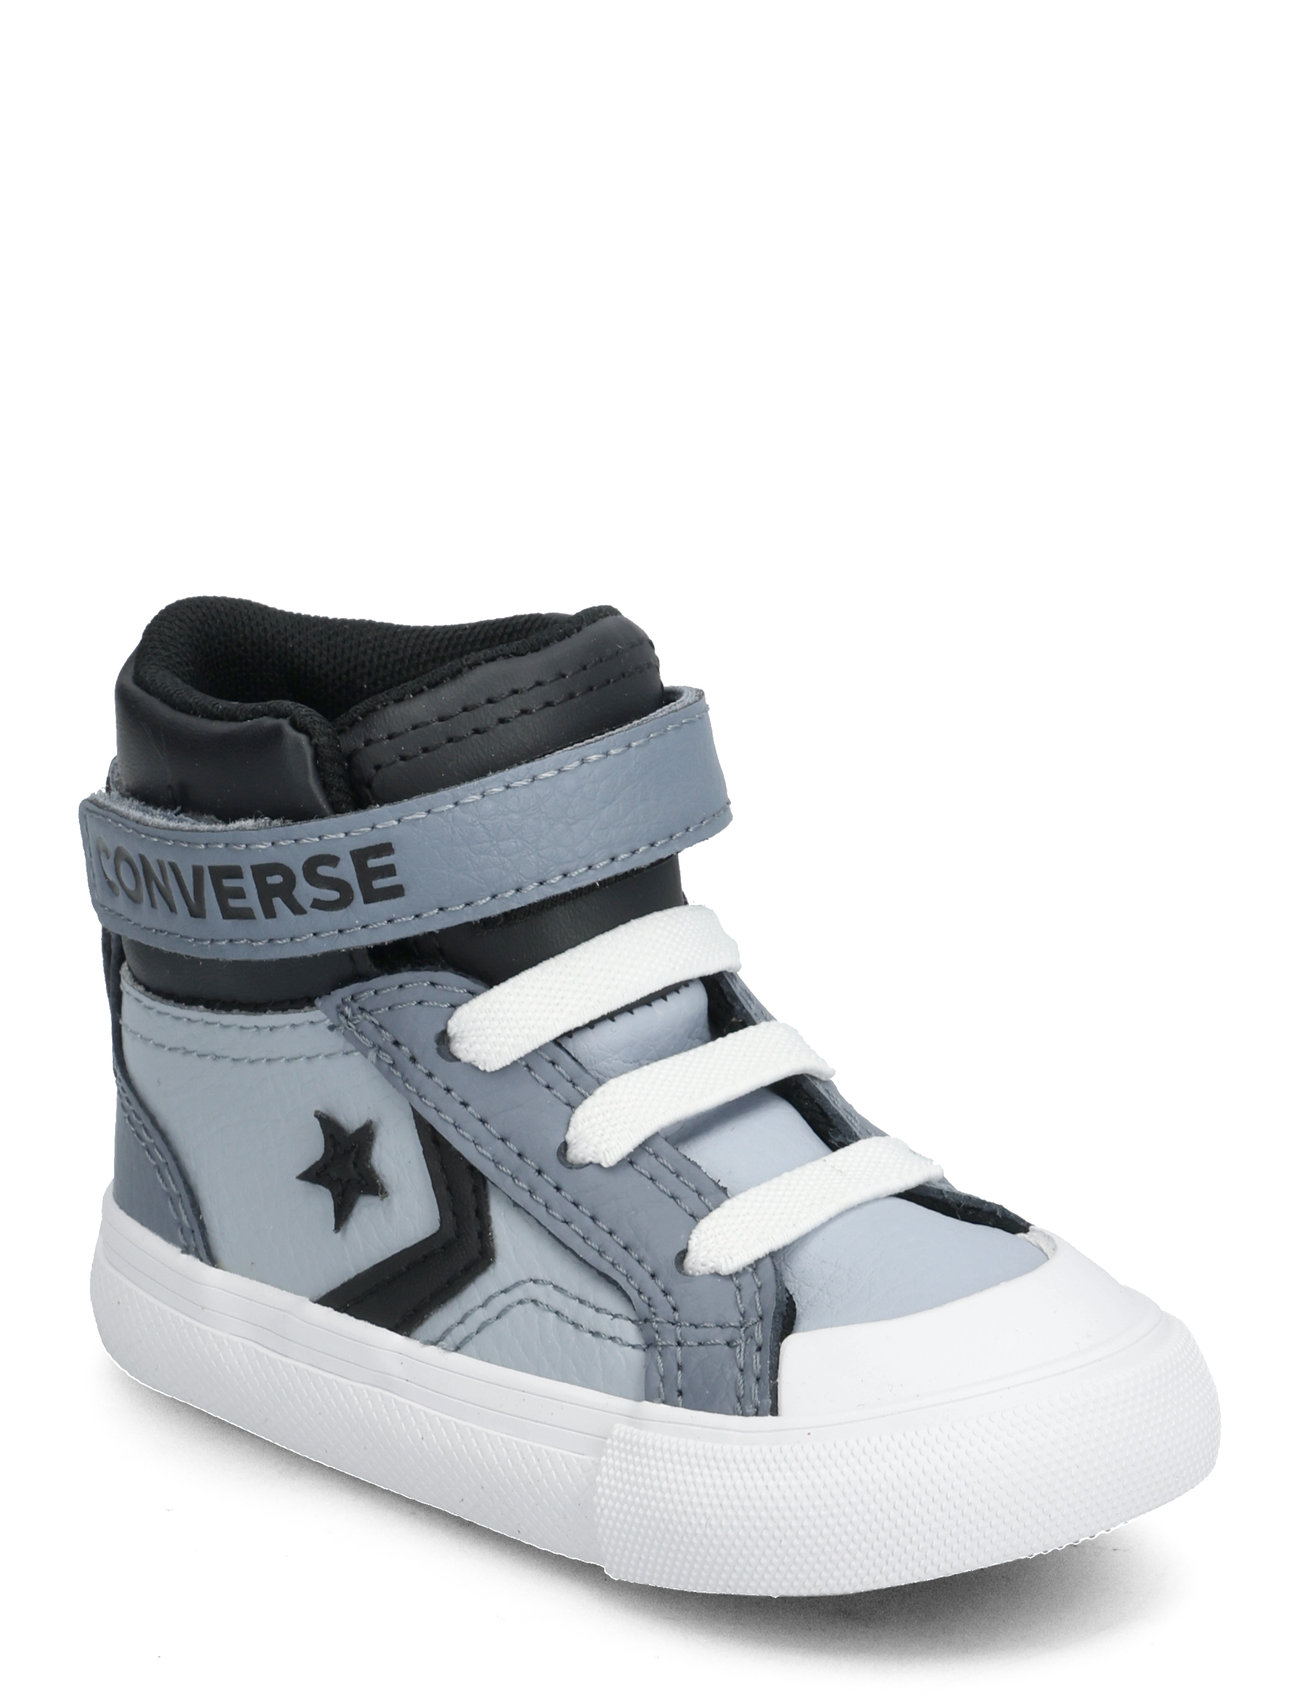 Converse Pro Blaze Strap | - Switzerland Boozt.com Sneakers